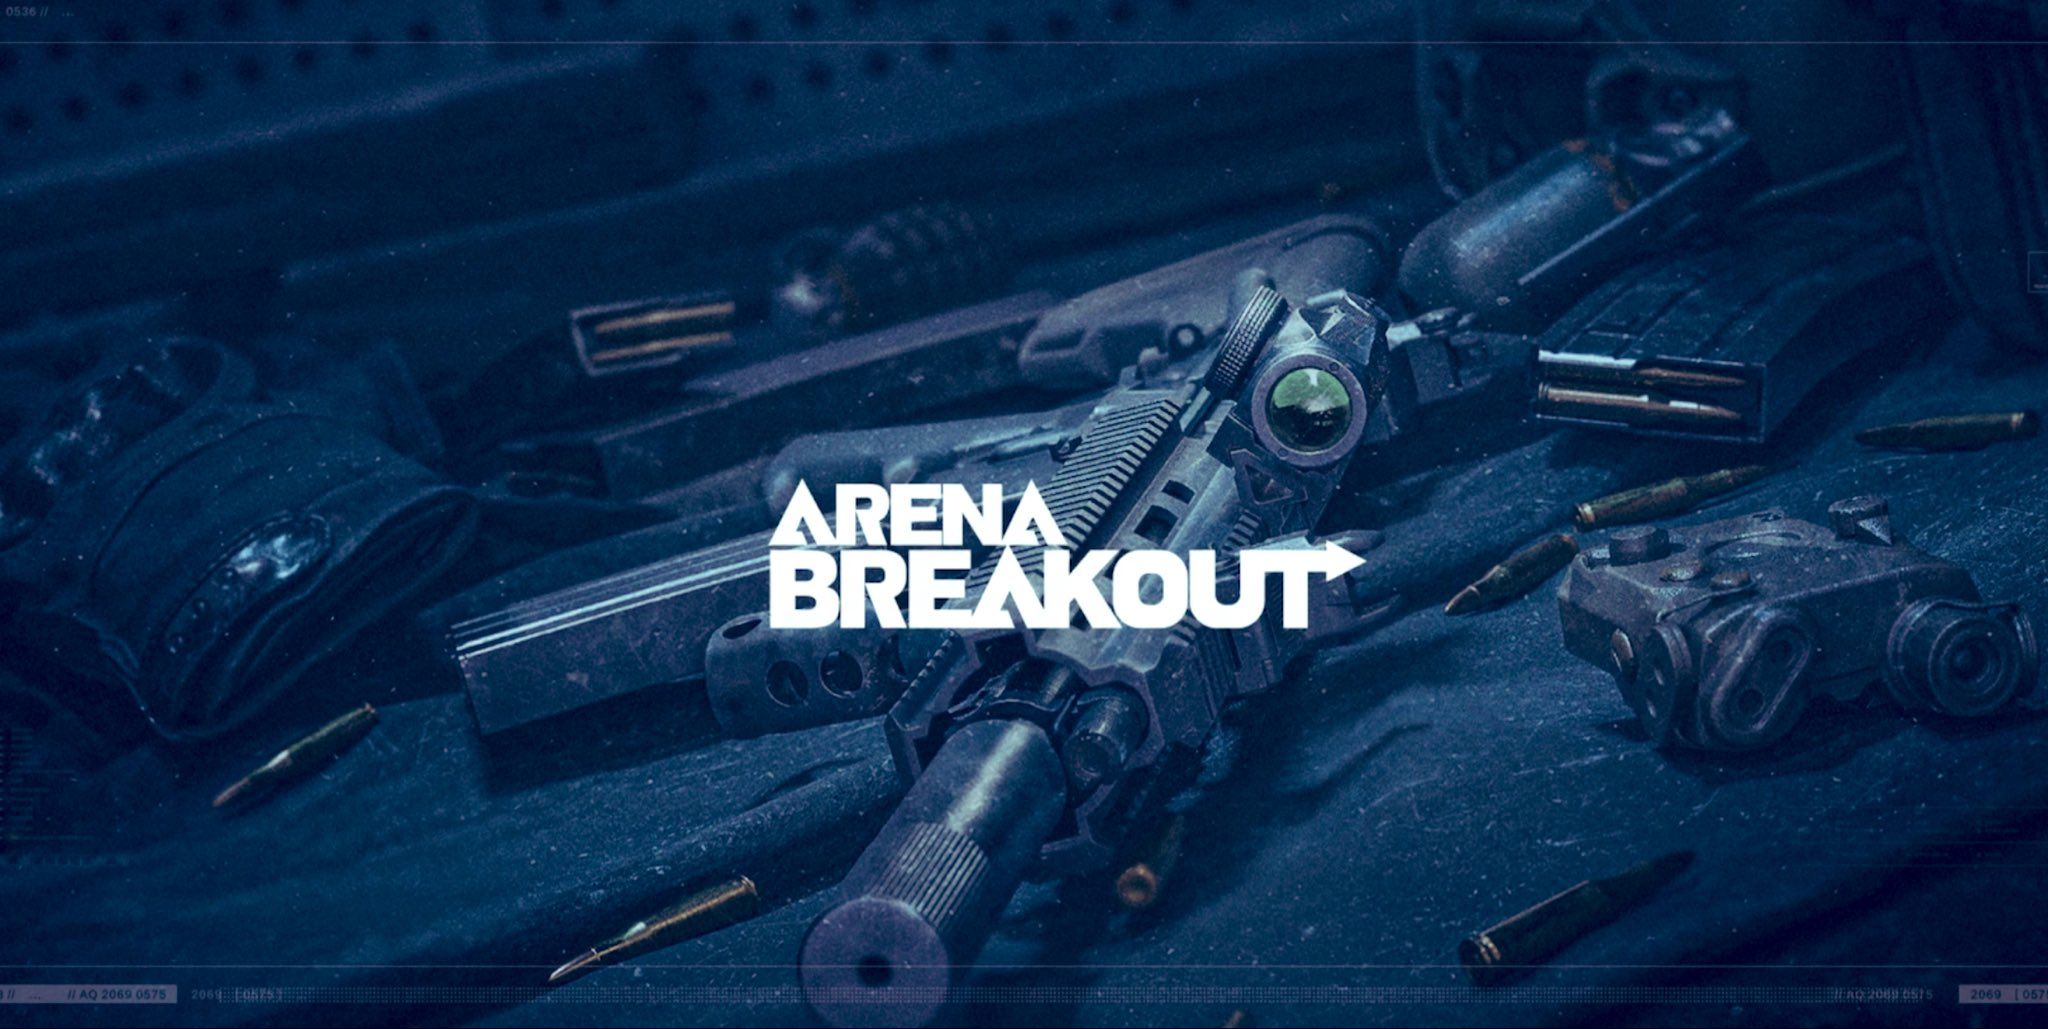 Arena breakout играть. Arena Breakout. Arena Breakout обои. Arena vrecaut. Arena Breakout пистолеты.